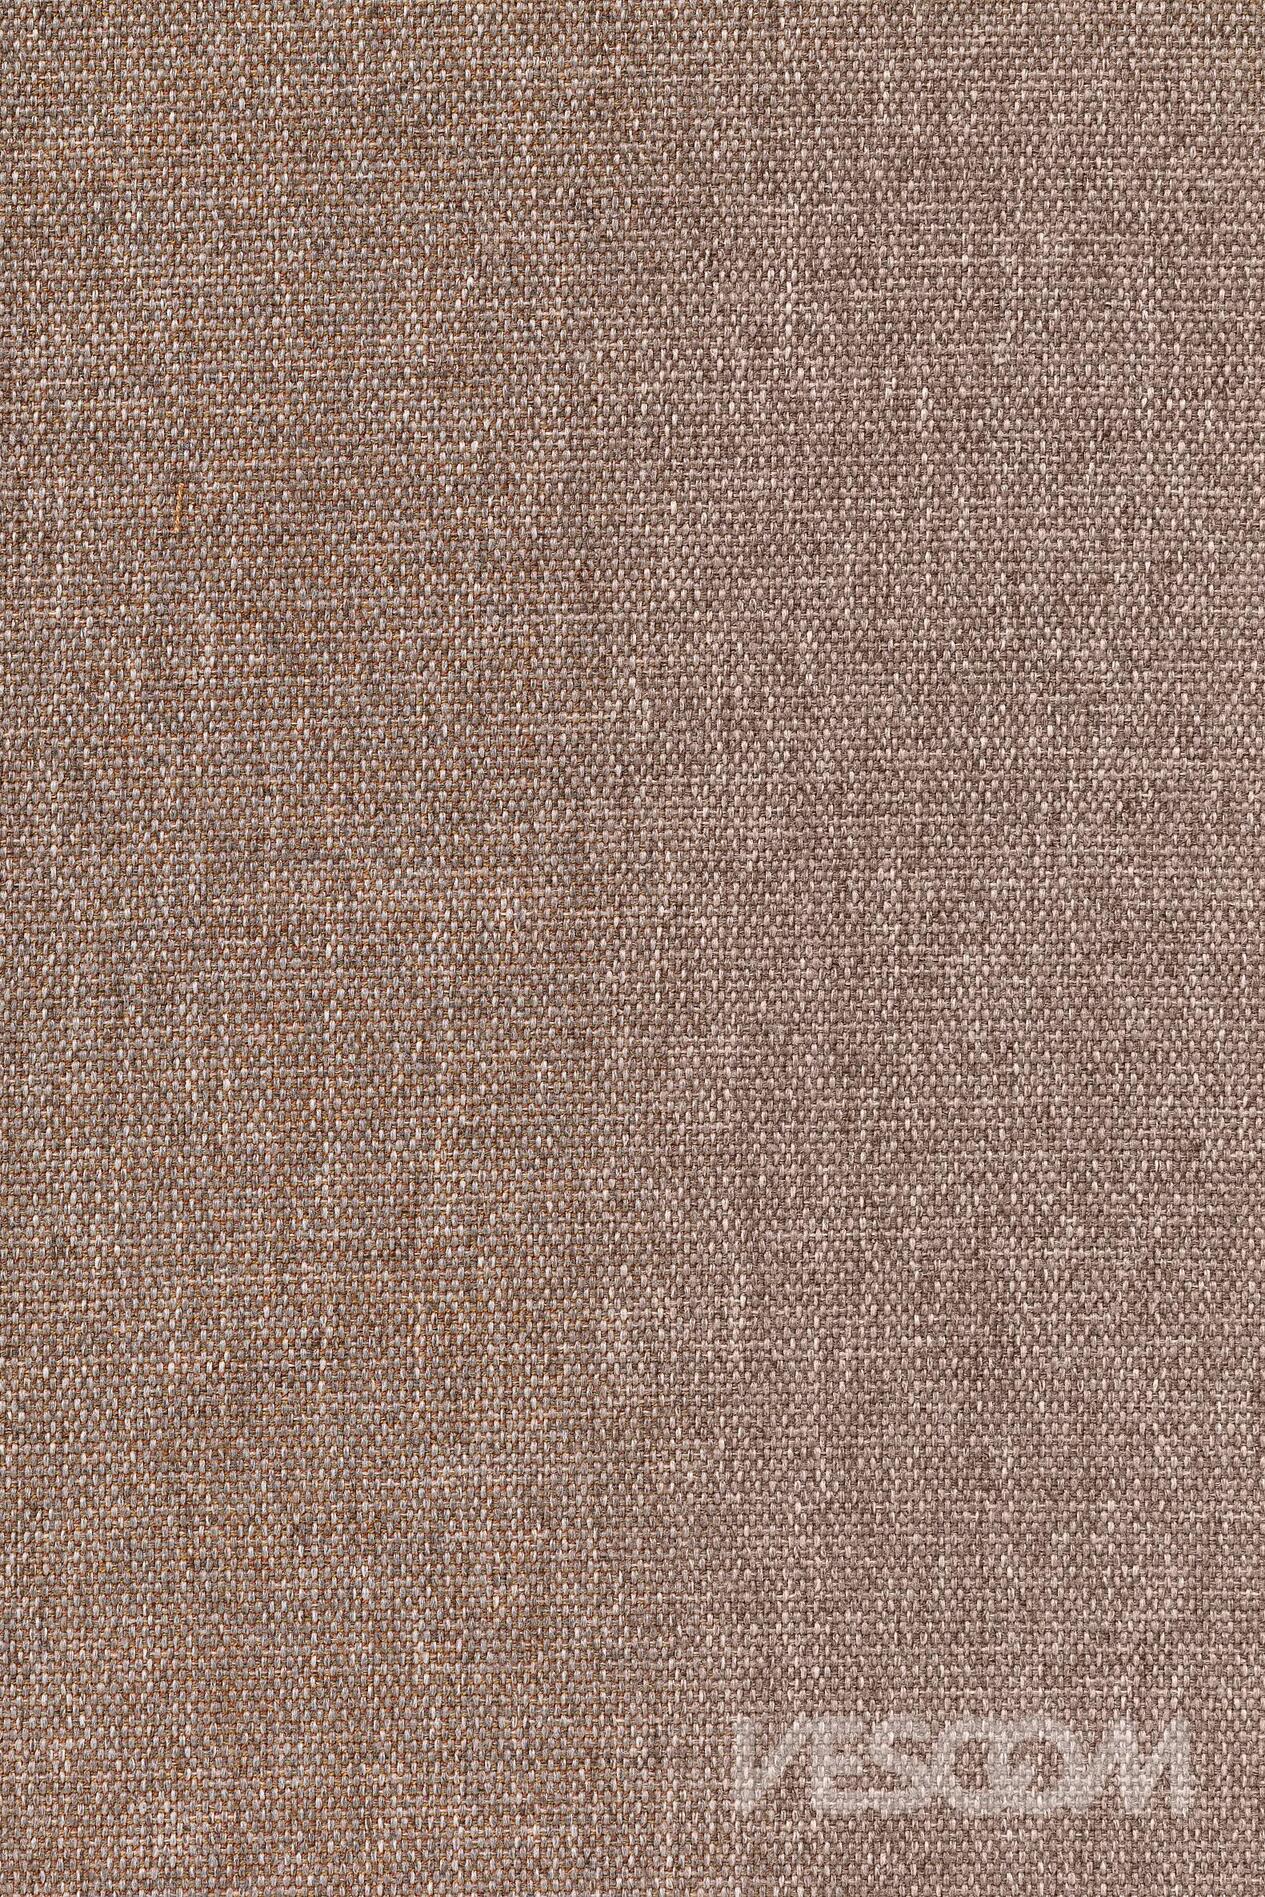 vescom-tula-curtain-fabric-8081-12